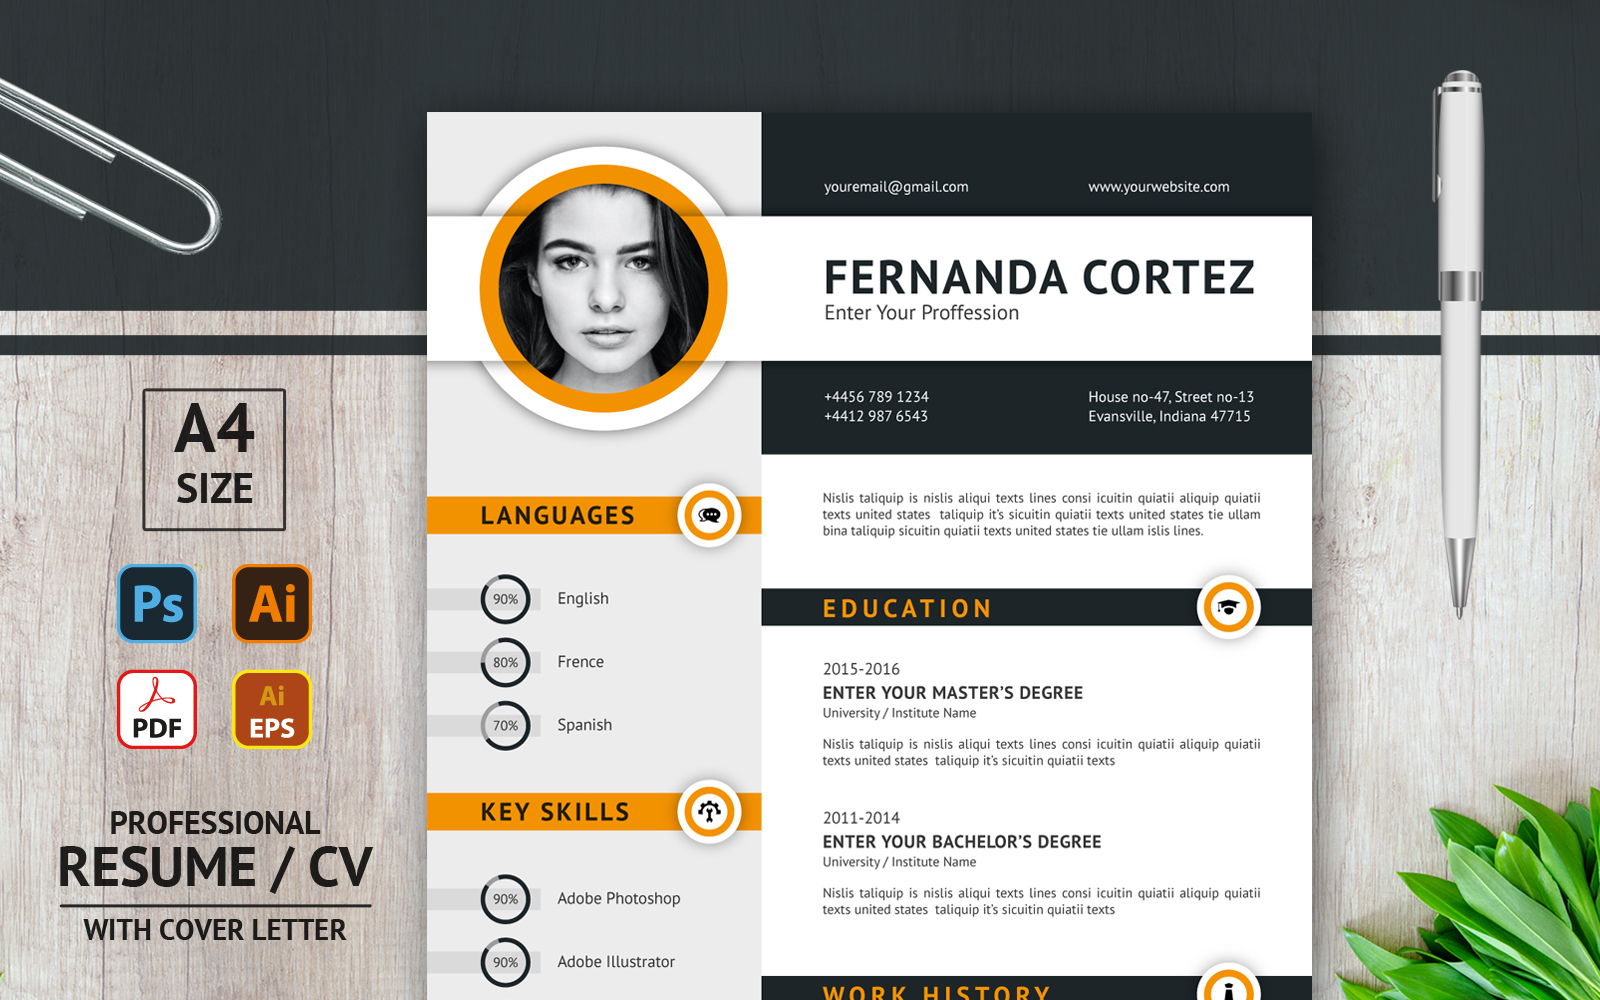 Fernanda Cortez - CV Layout - Printable Resume Template